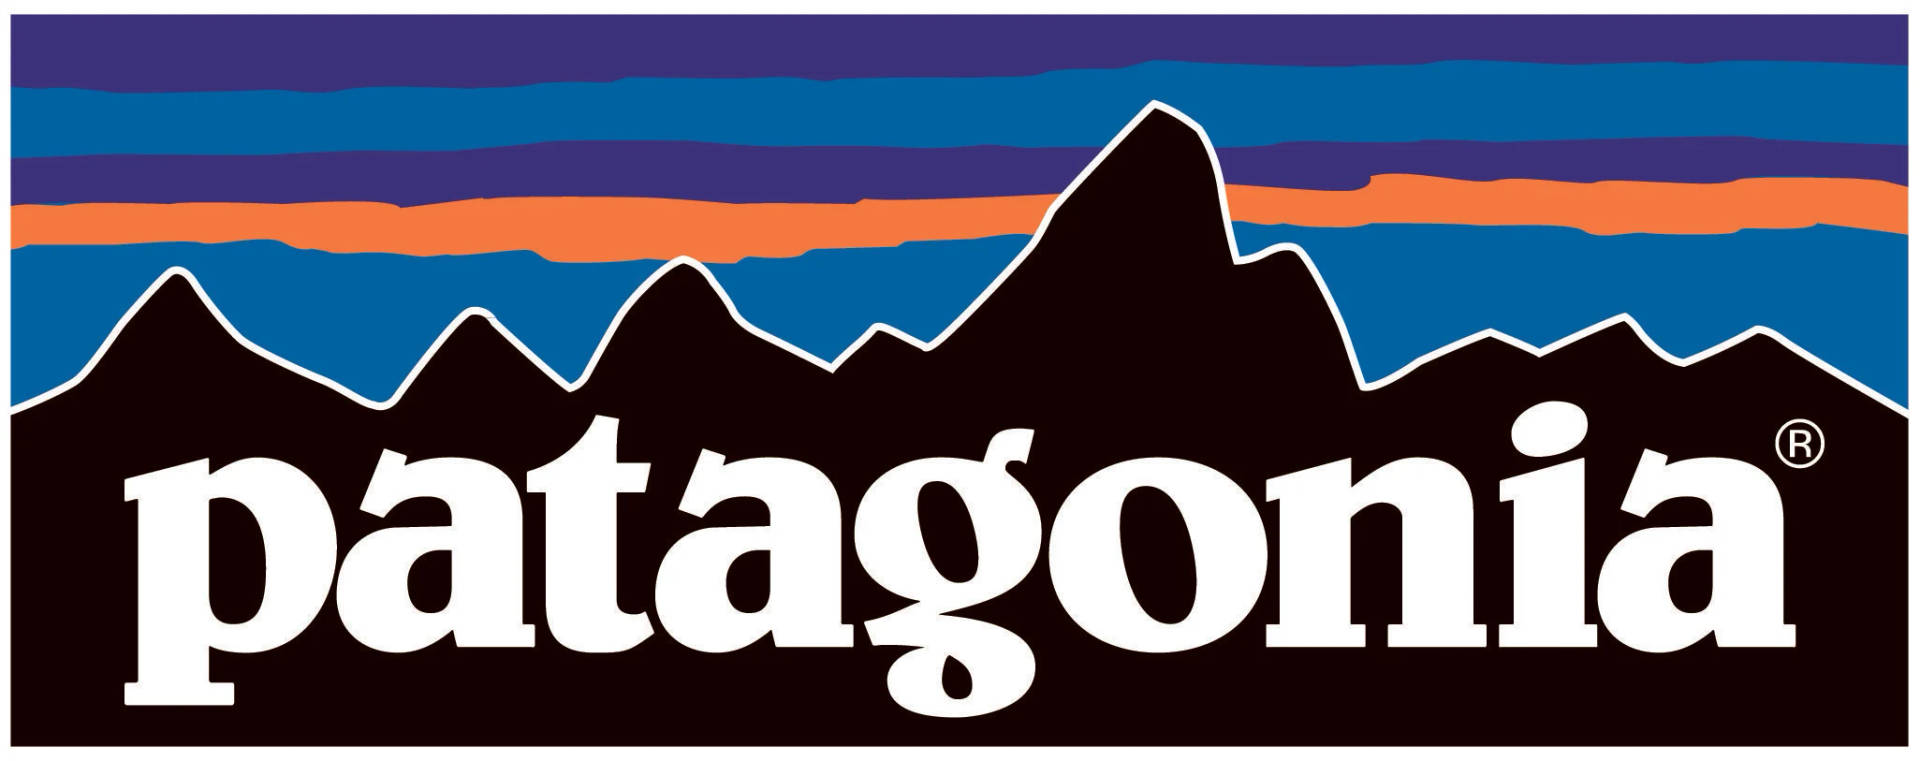 The Iconic Patagonia Brand Logo